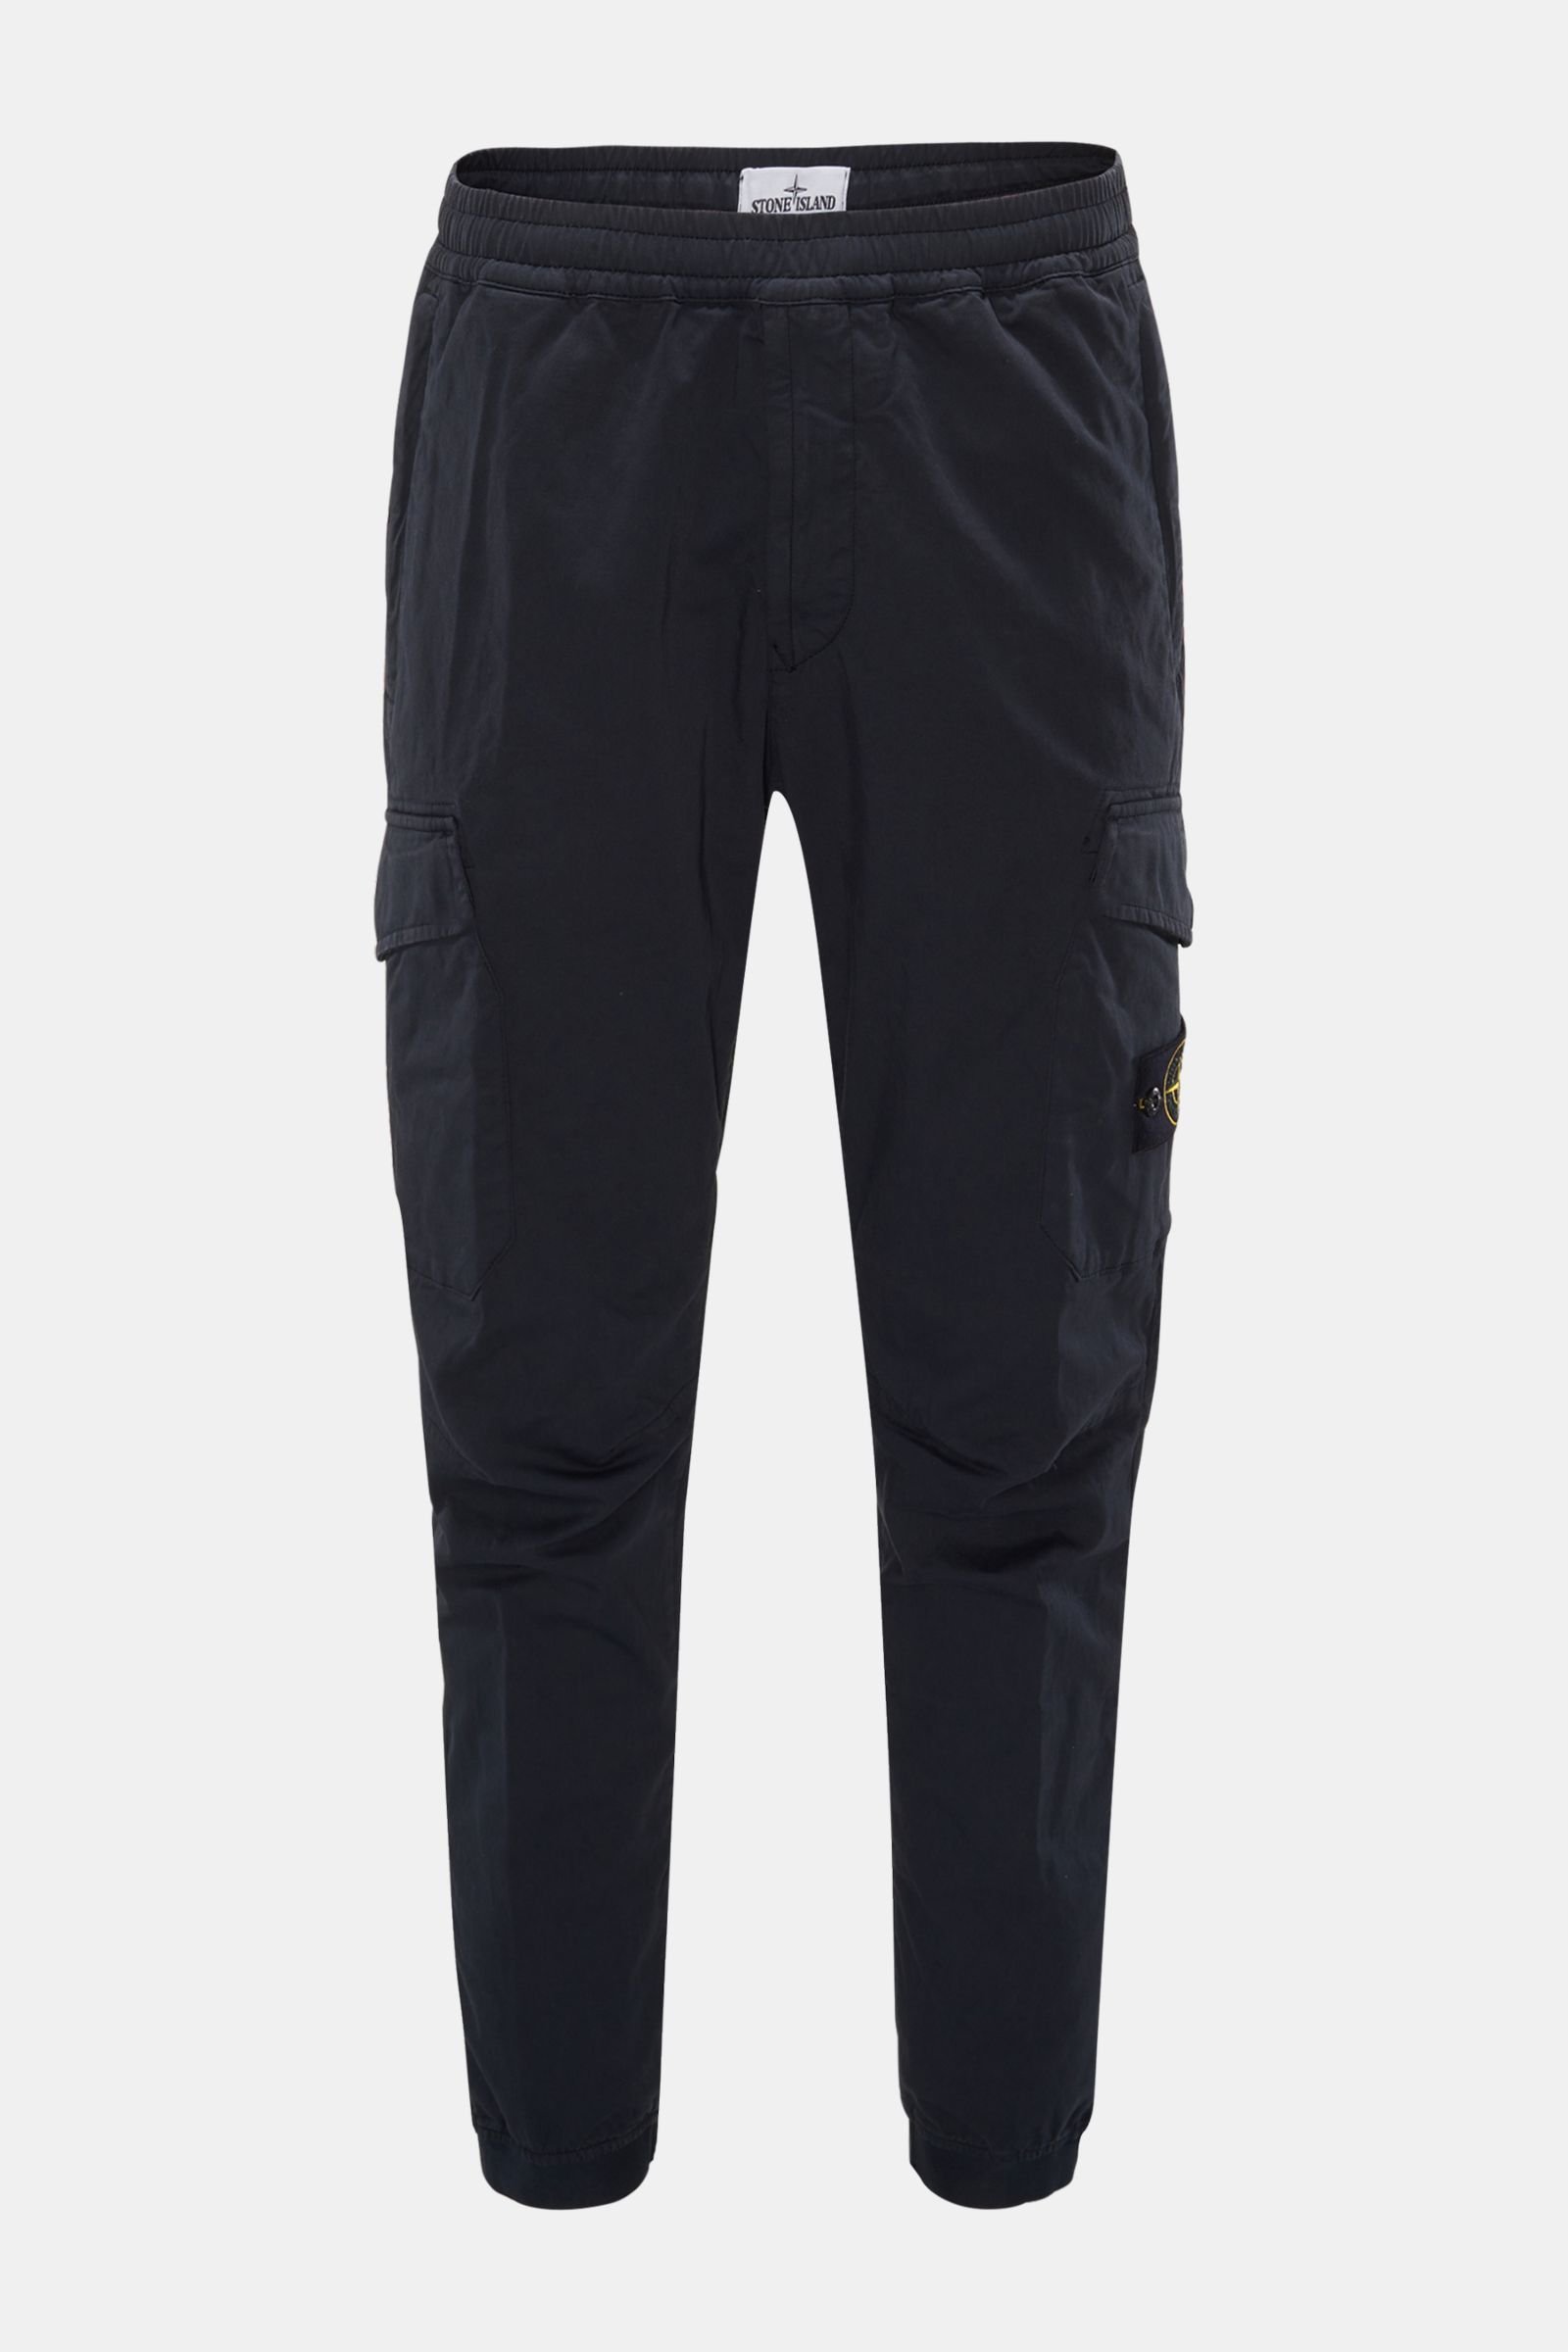 Cargo jogger pants navy